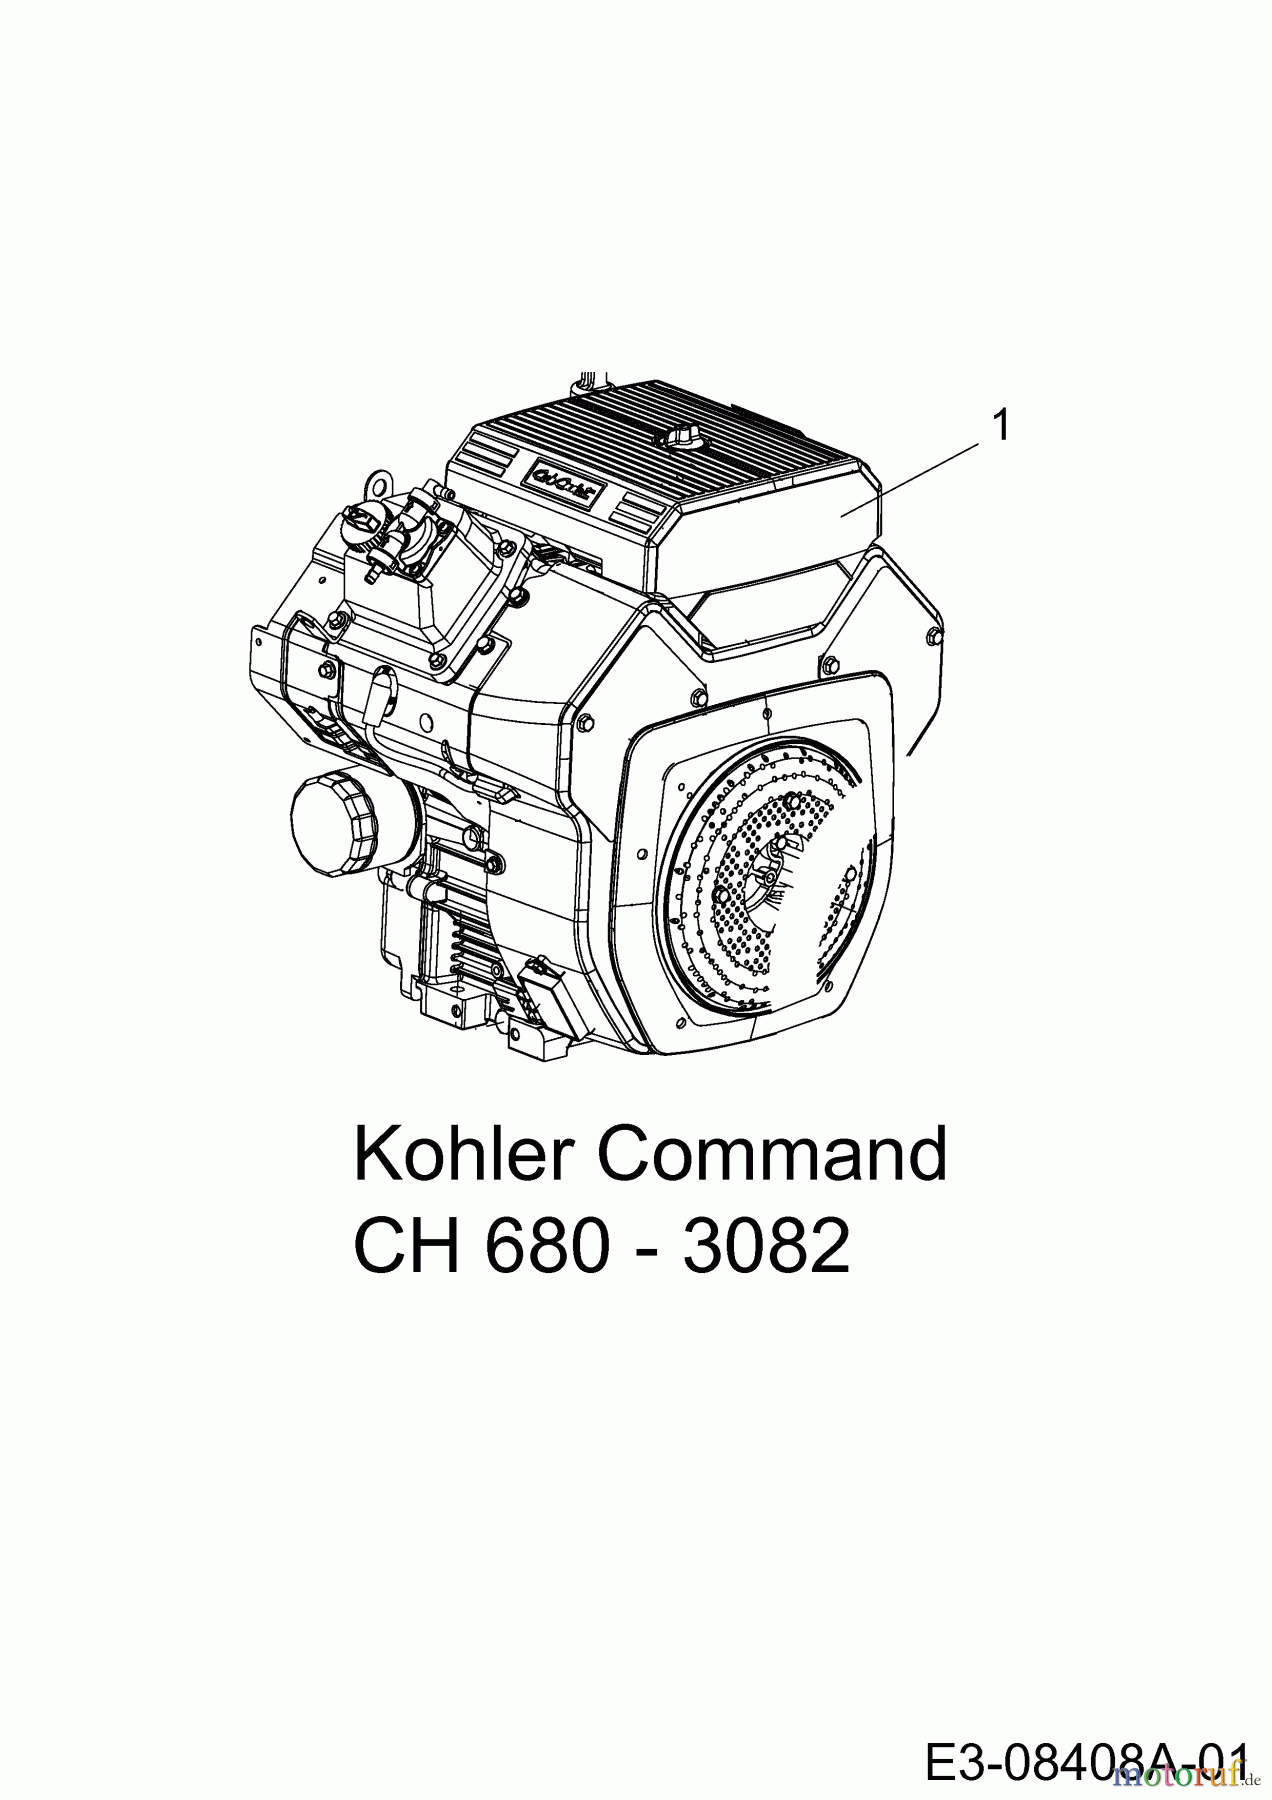  Cub Cadet Garden tractors GTX 2100 14A-3GE-603  (2013) Engine Kohler